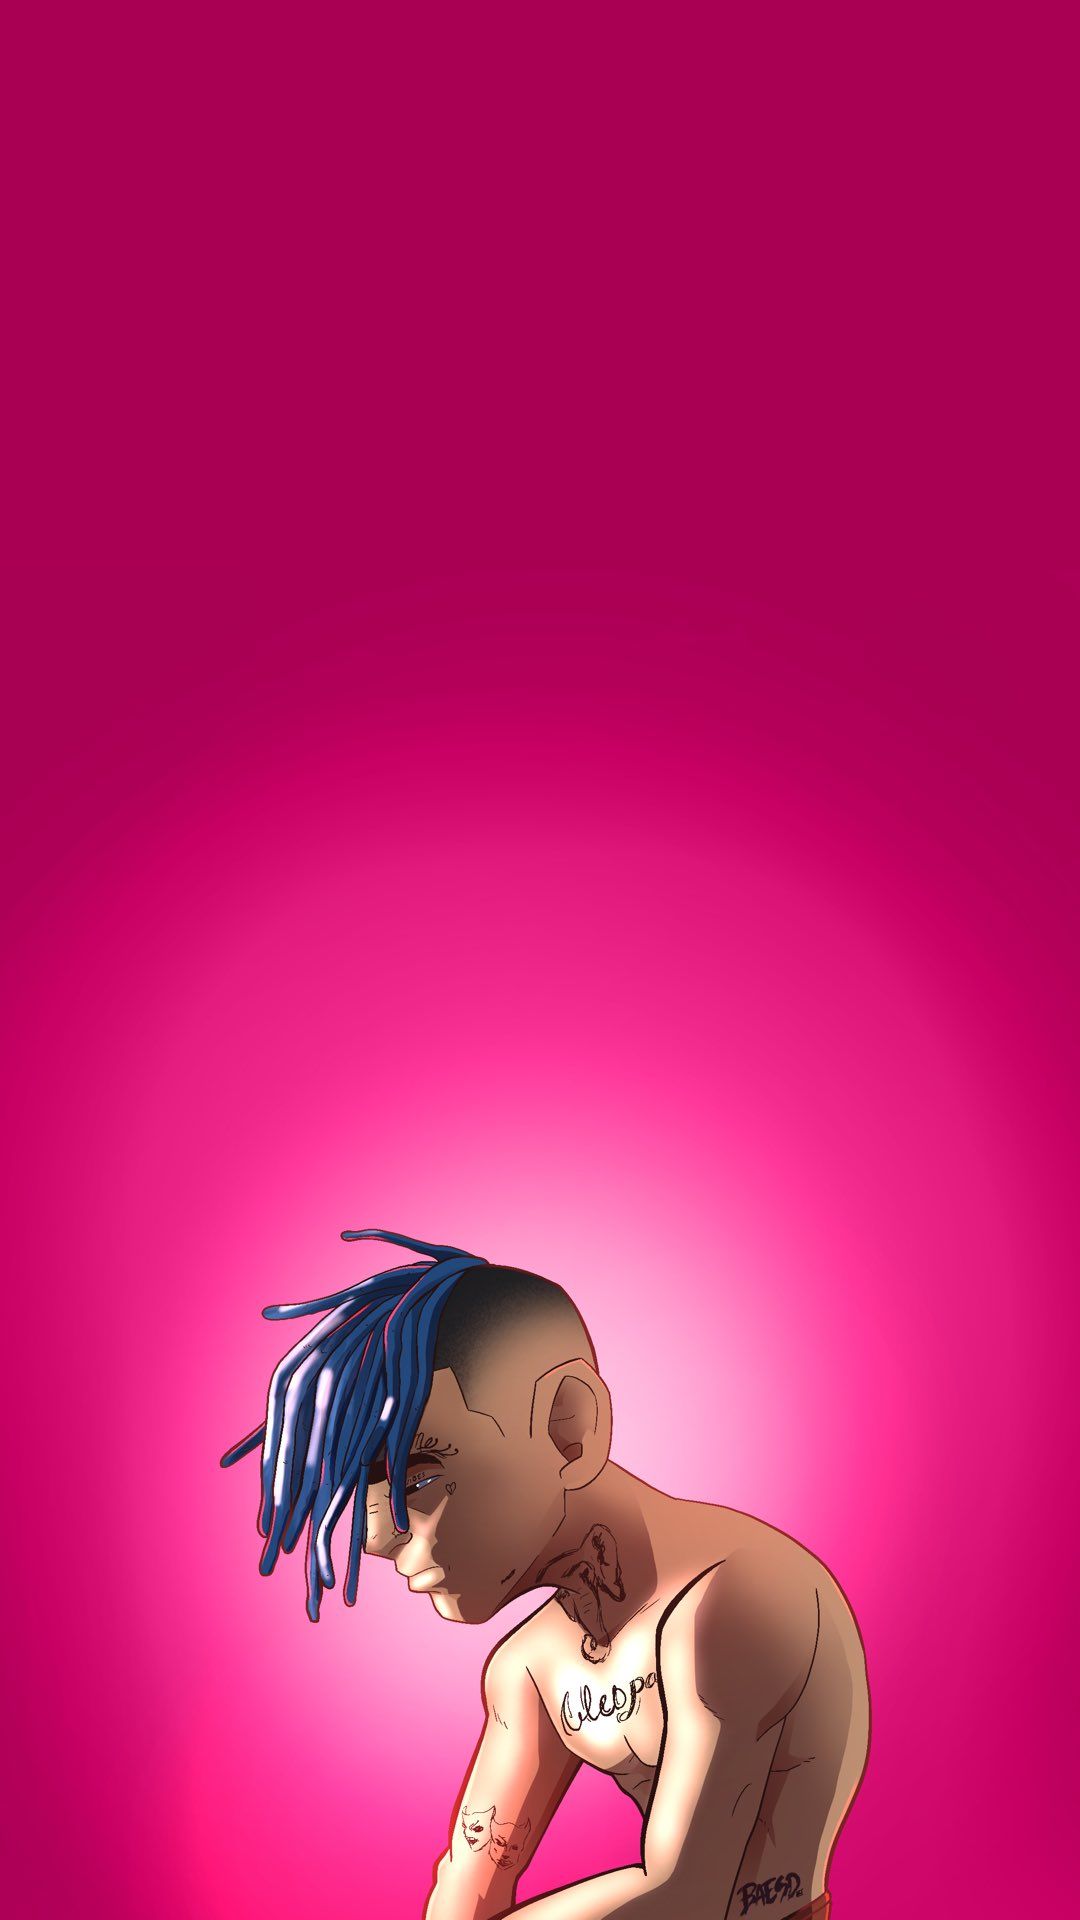 IPhone wallpaper of the cover art for XXXTentacion's album 17. - XXXTentacion